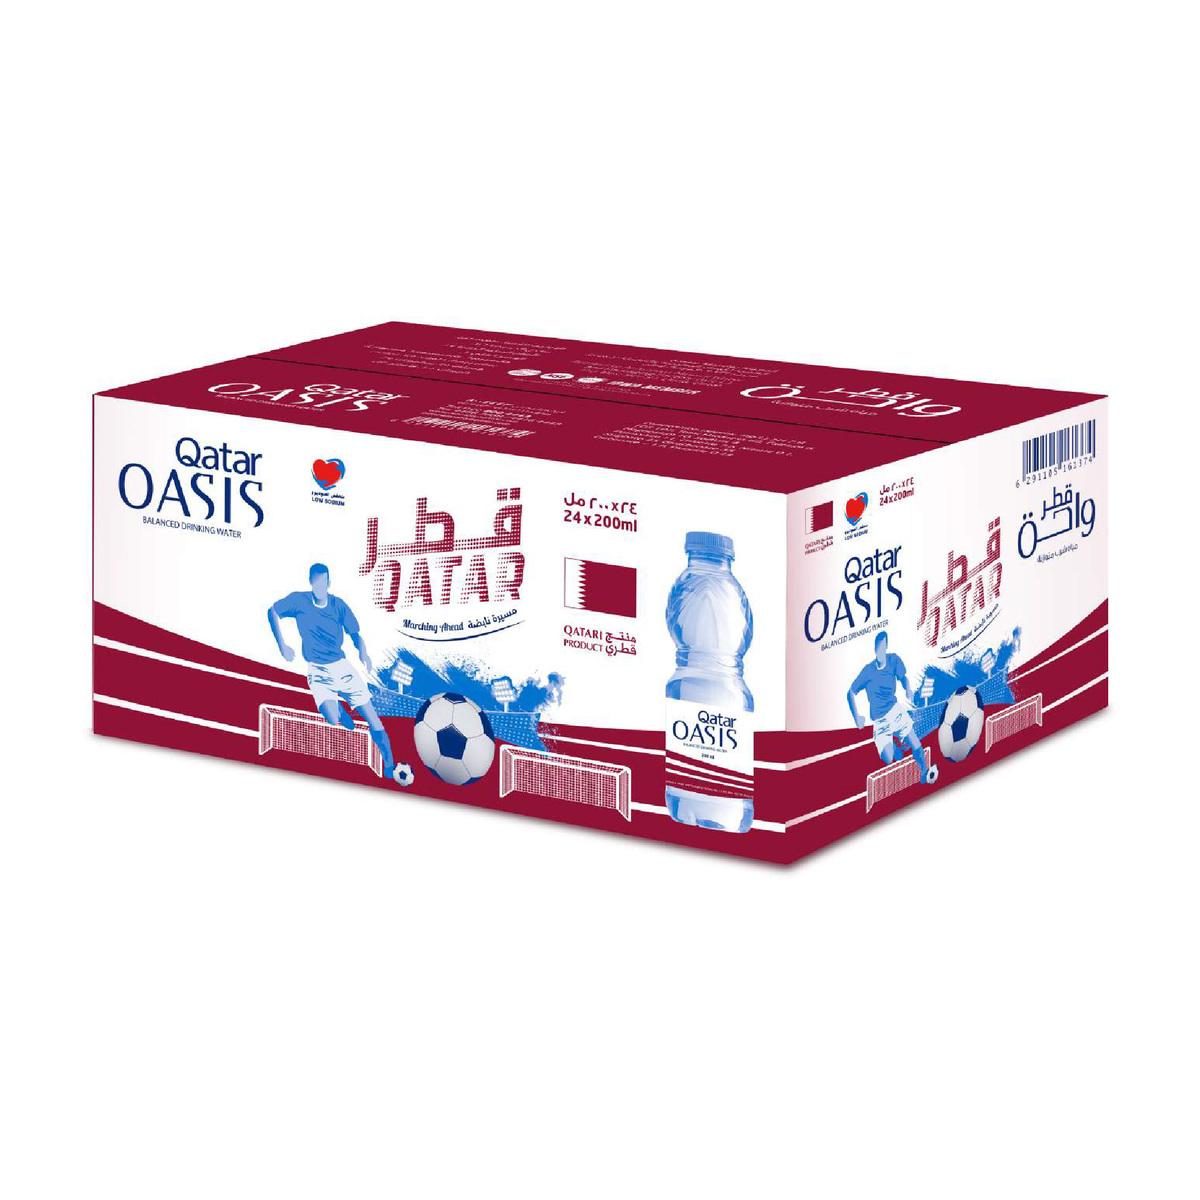 Qatar Oasis Balanced Drinking Water 200ml